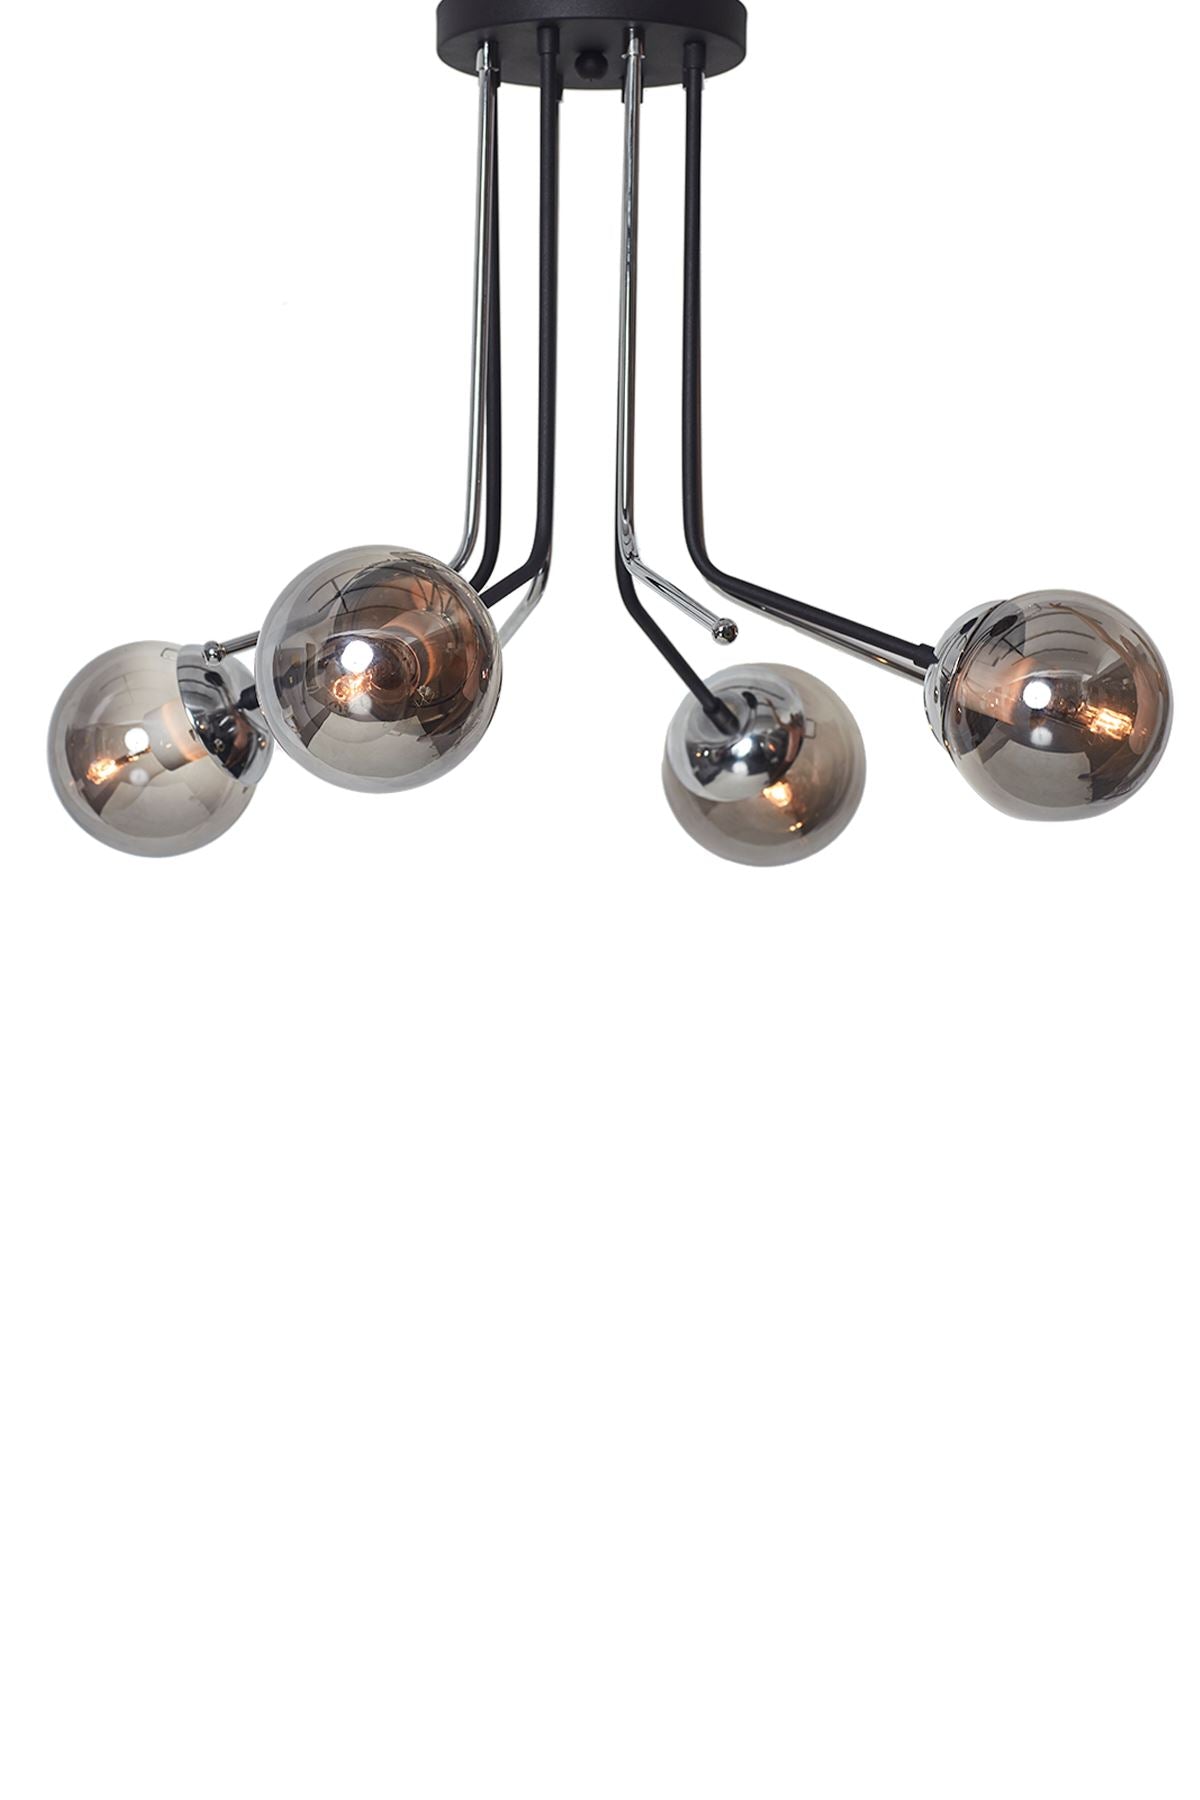 Luzarana Bella 4-piece chrome black metal body smoke-colored design luxury chandelier